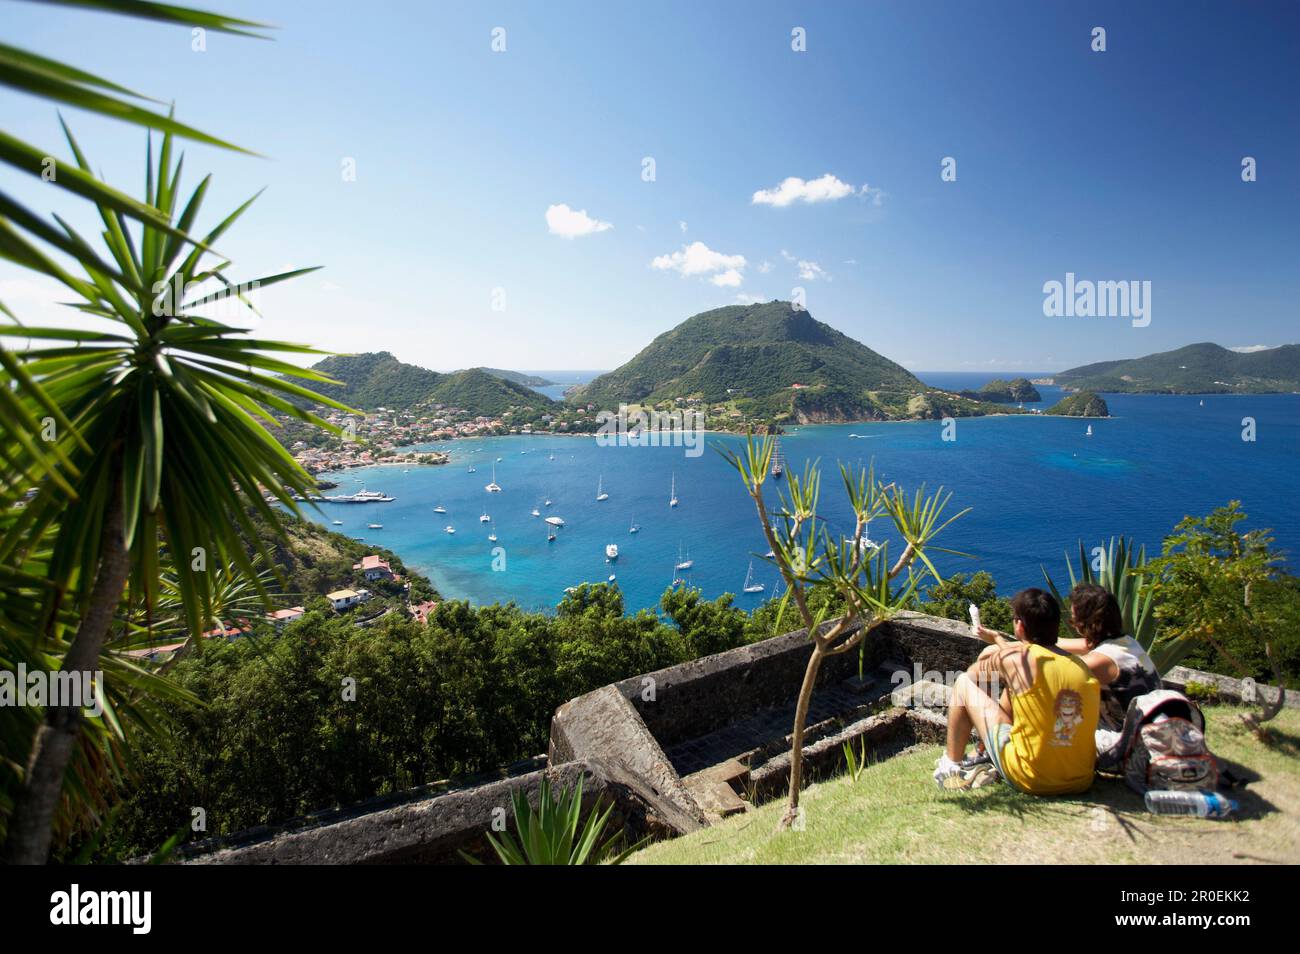 Panoramic view, Couple admiring the view, Fort Napoleon, Terre-de-Haute, Les Saintes Islands, Guadeloupe, Caribbean Sea, America Stock Photo